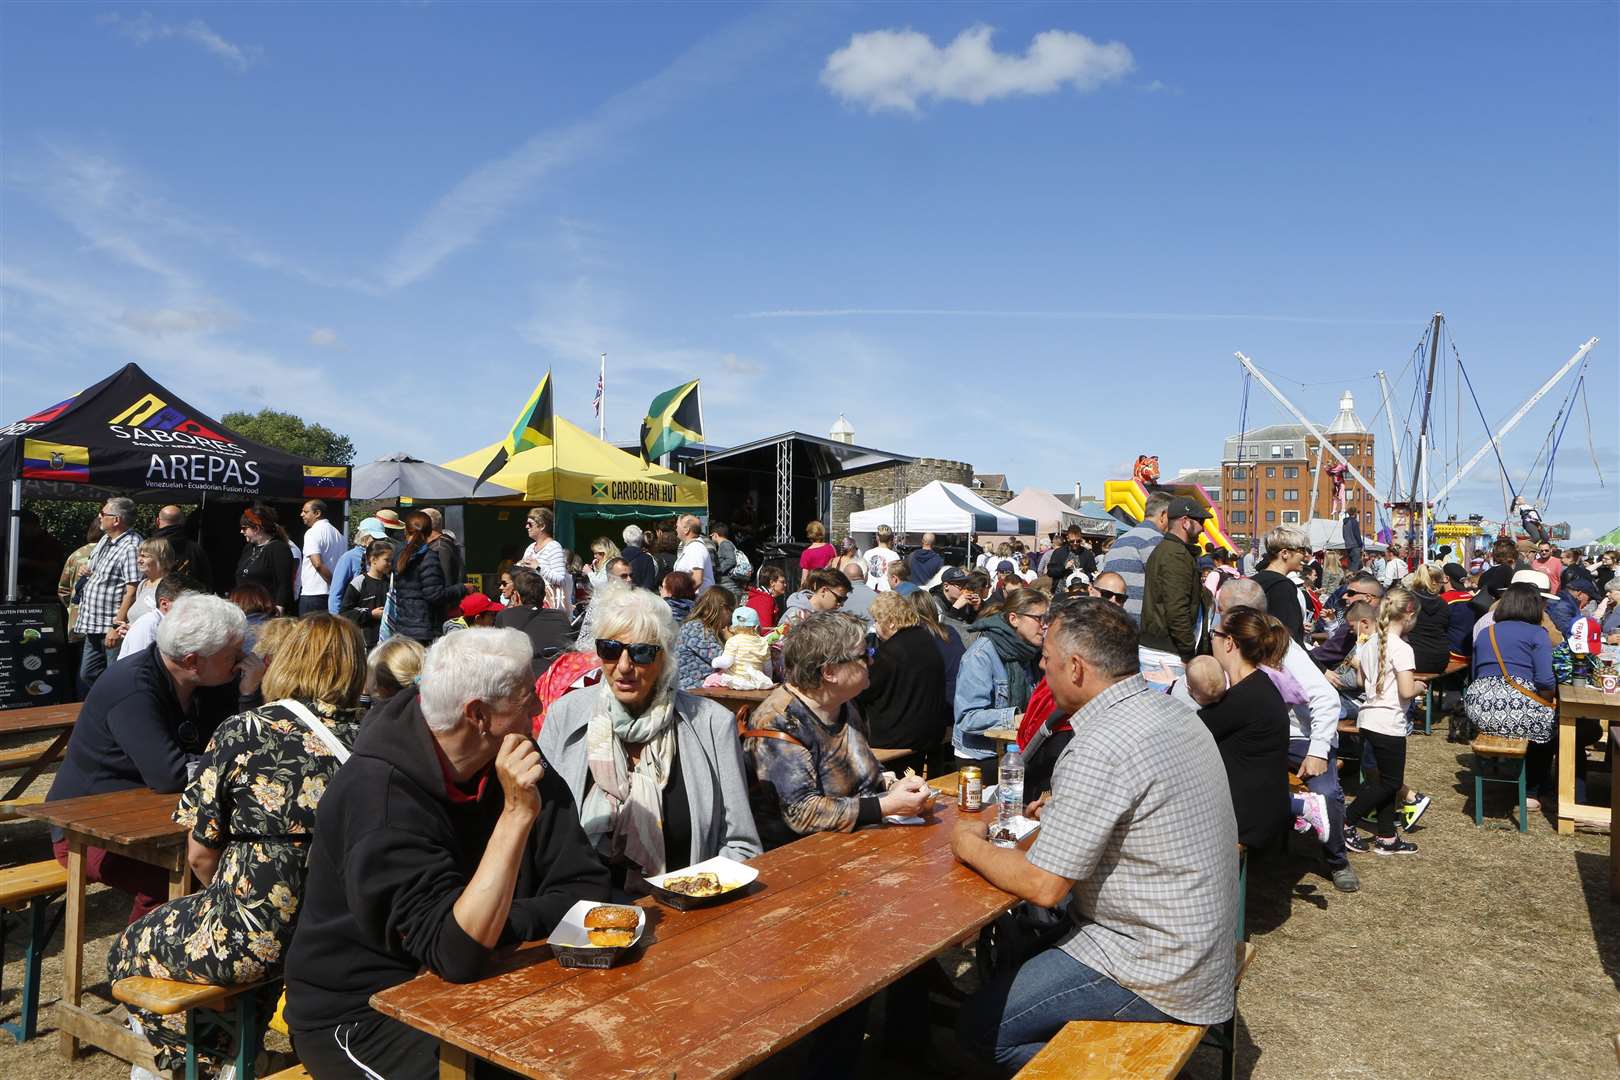 Deal Food & Drink Festival has been popular since it began in 2017. Picture: Andy Jones.